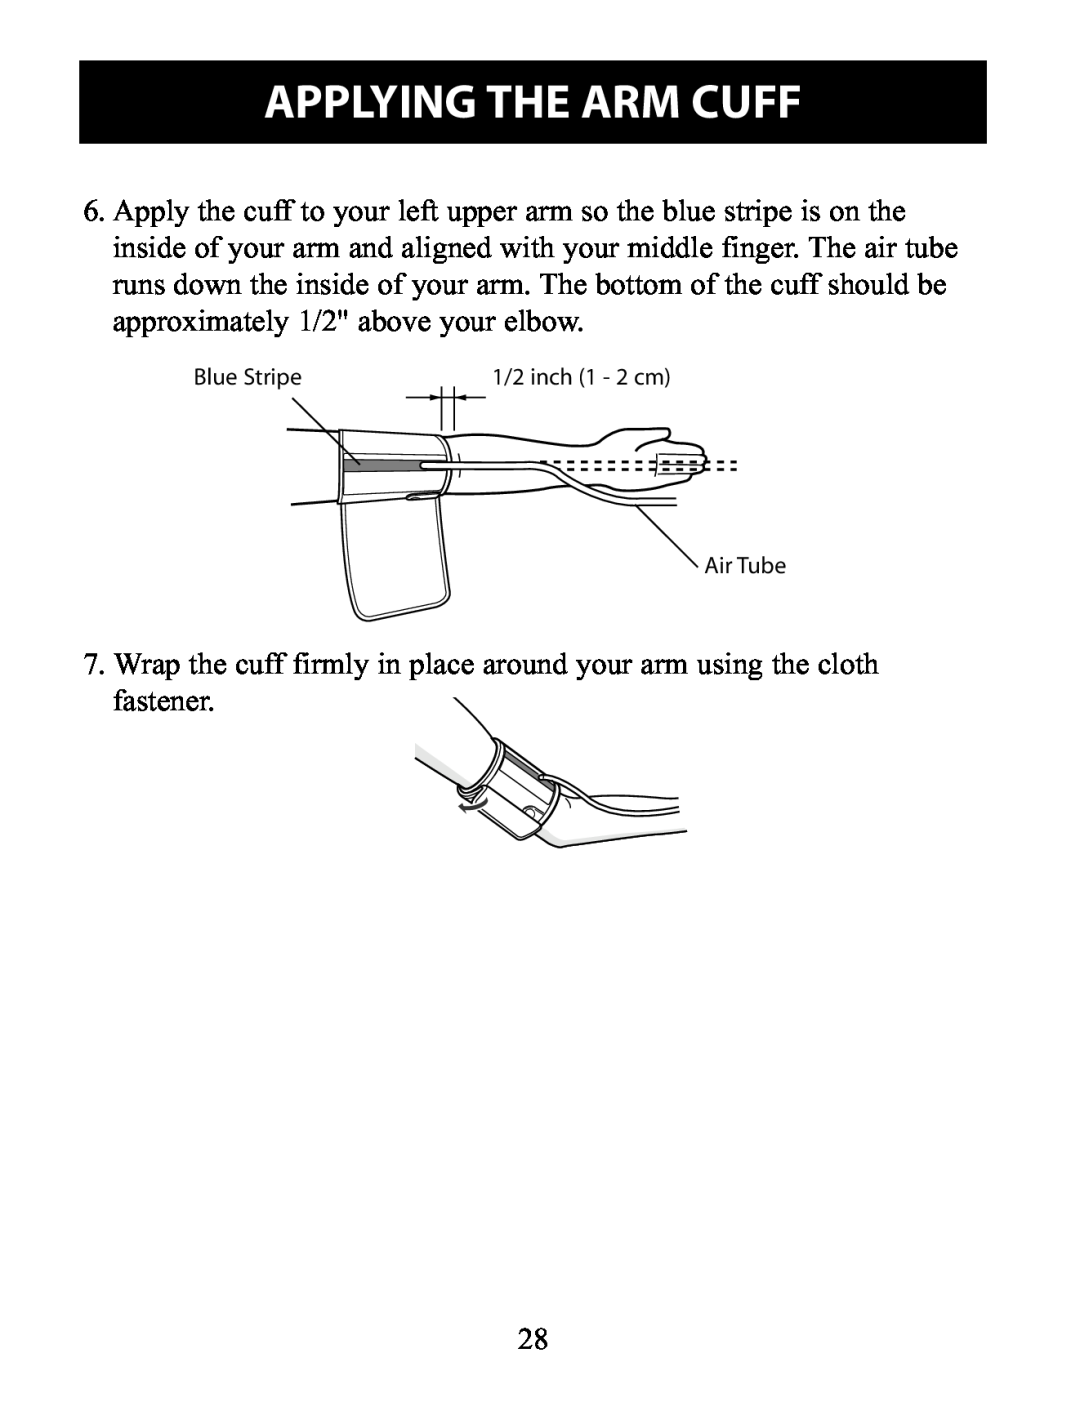 Omron Healthcare BP791IT instruction manual Applying The Arm Cuff, Blue Stripe, Air Tube, 1/2 inch 1 - 2 cm 